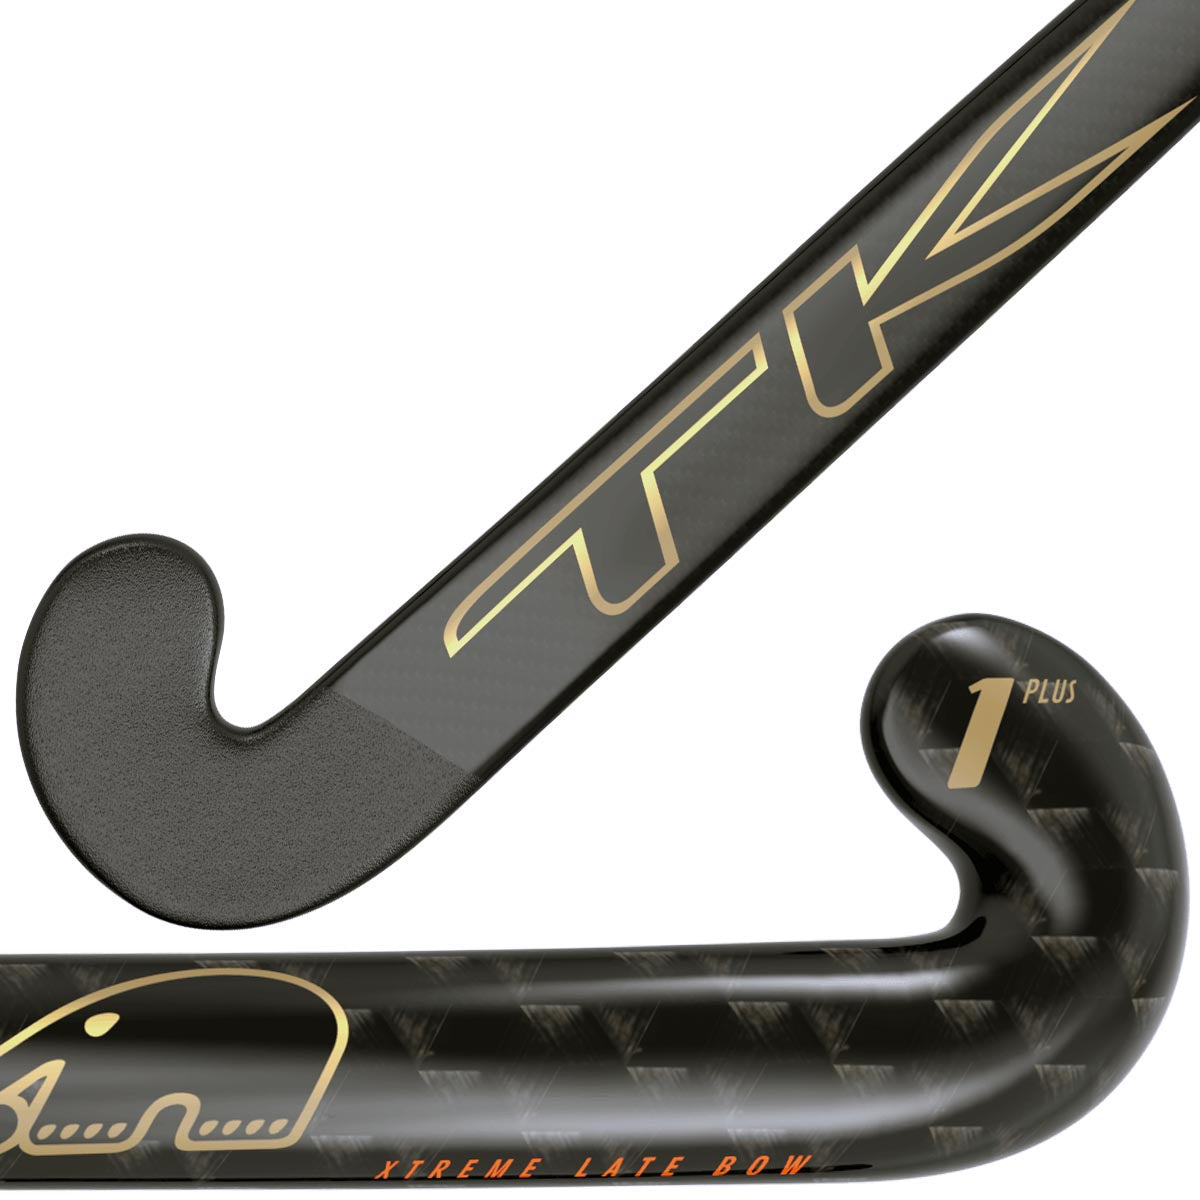 Word gek Sui spons TK 1 Plus Xtreme Late Bow Field Hockey Stick – Hit the Net Sports